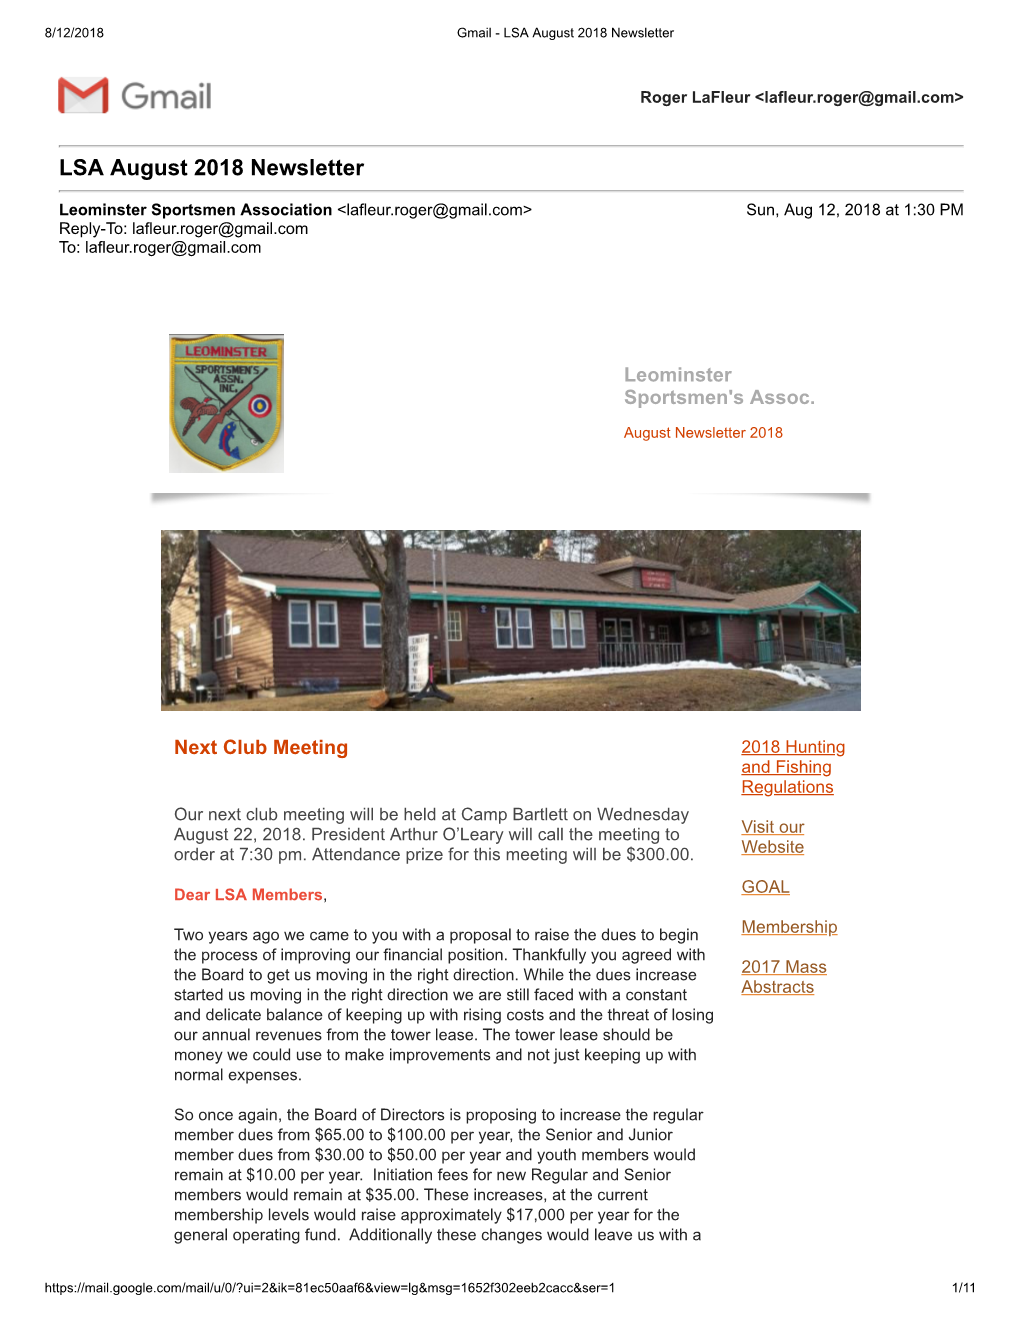 LSA August 2018 Newsletter